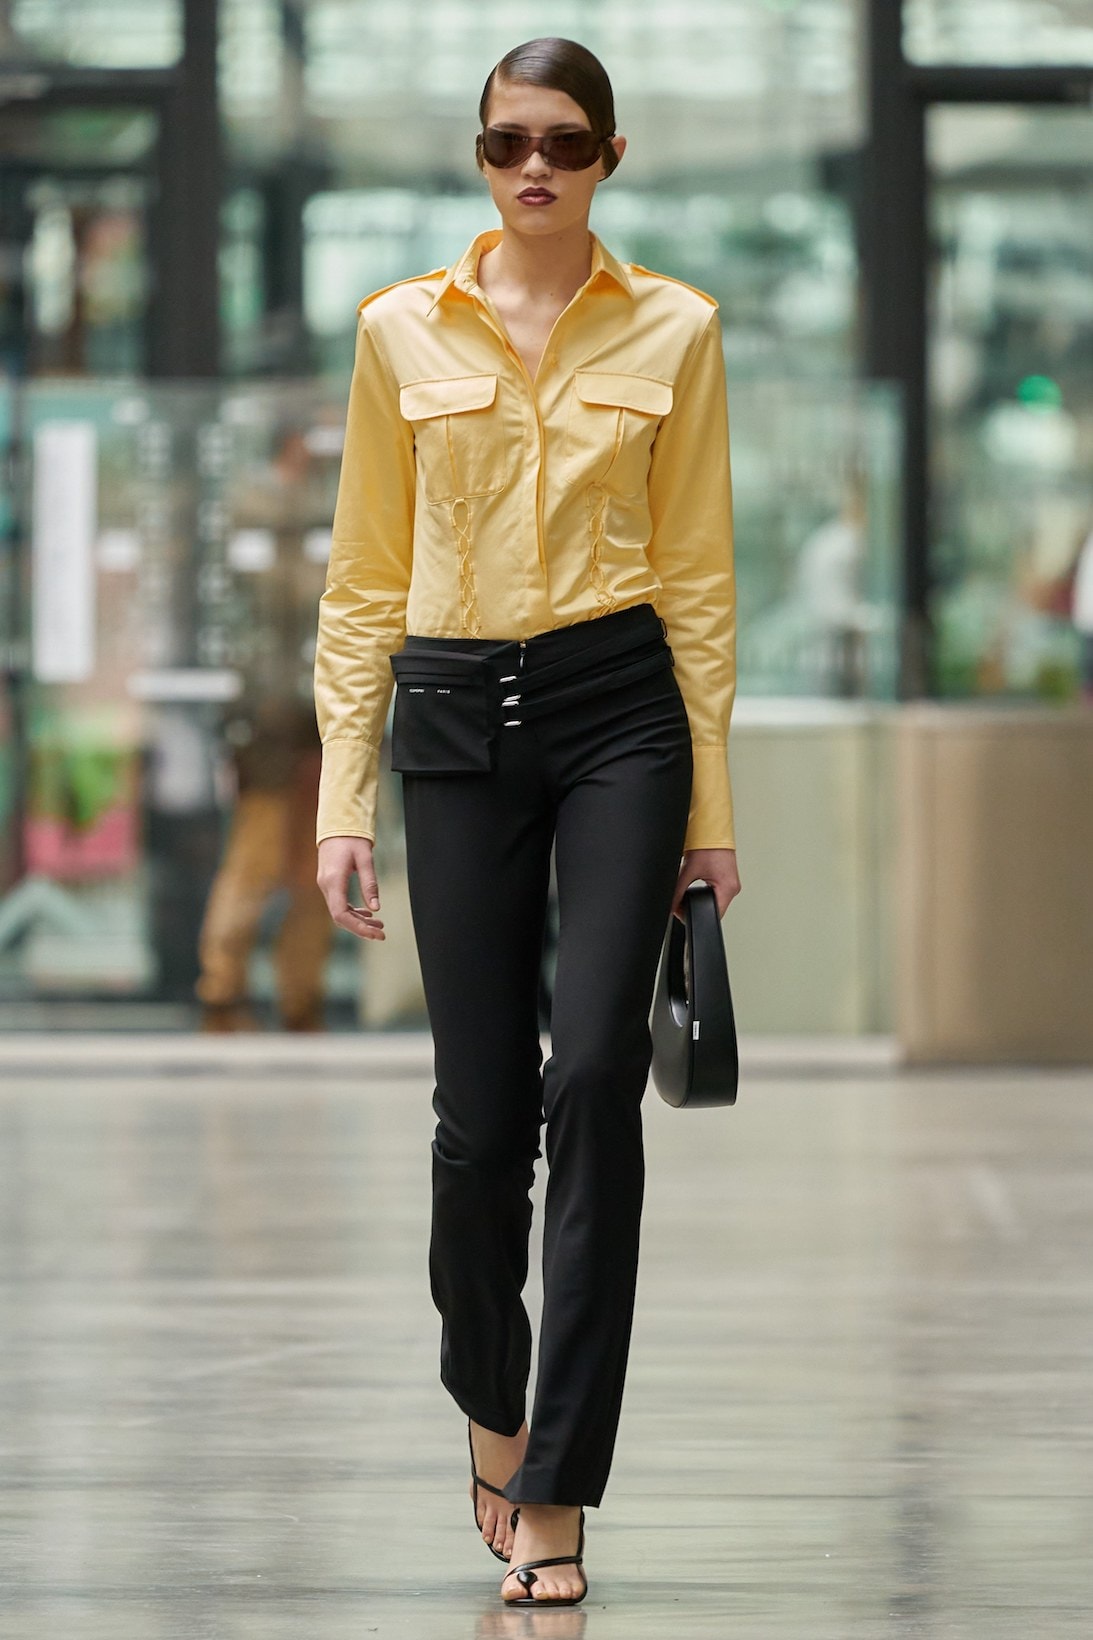 coperni sebastien meyer arnaud vaillant paris fashion week fall winter collection yellow long sleeve shirt black pants